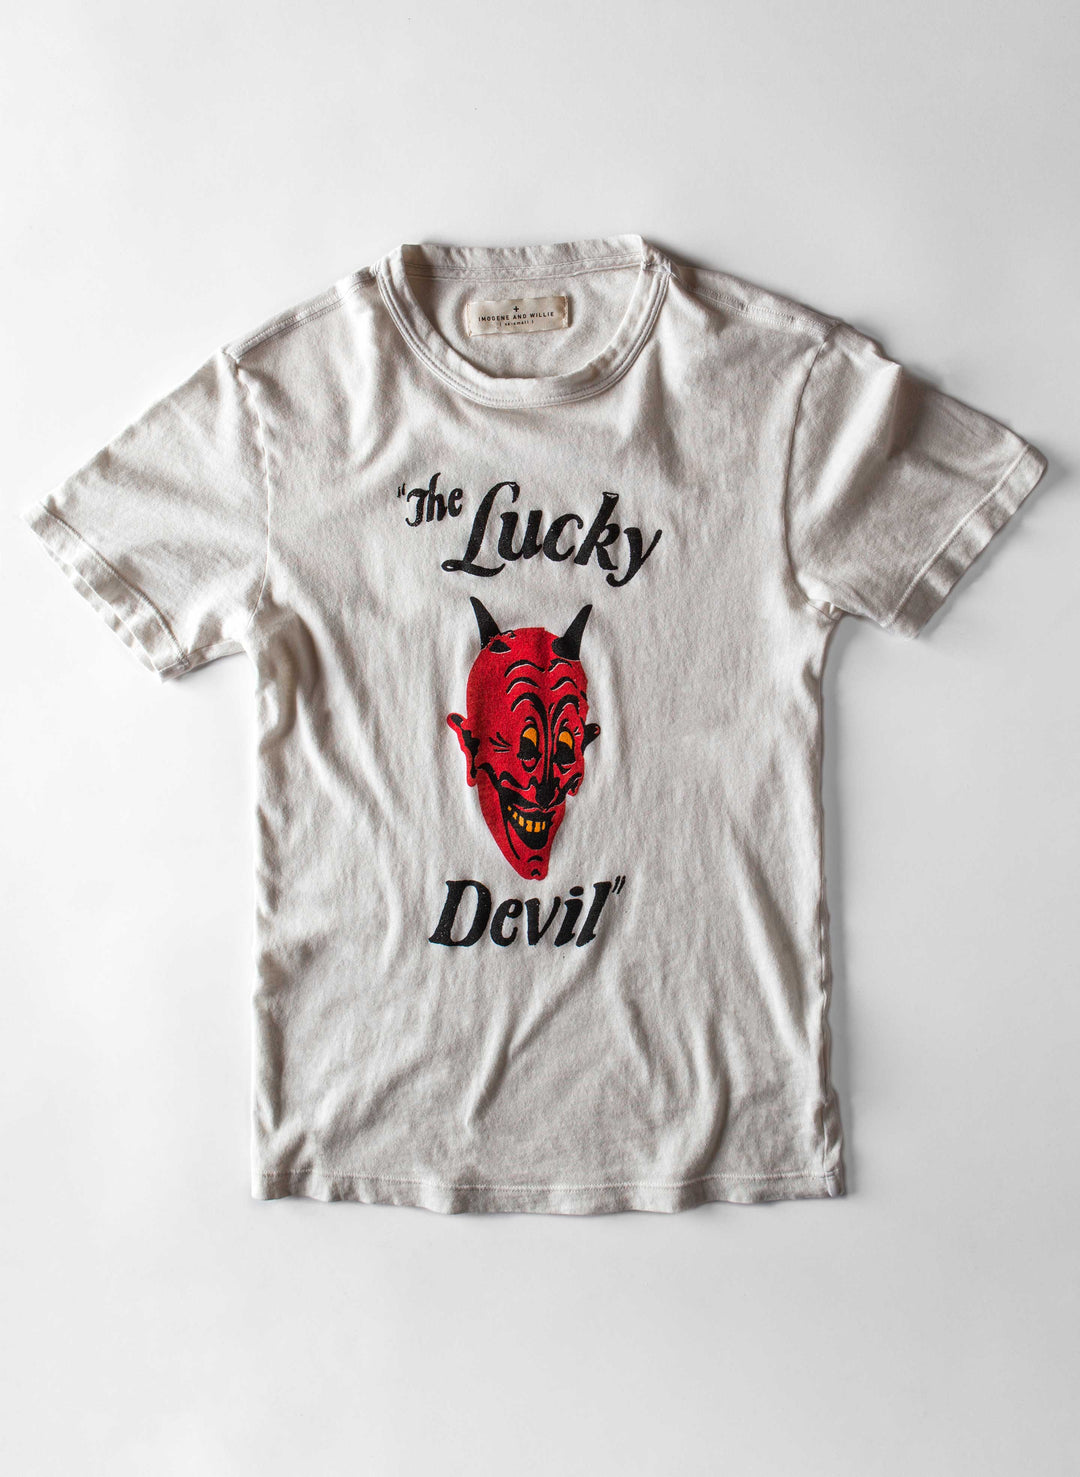 the "lucky devil" tee